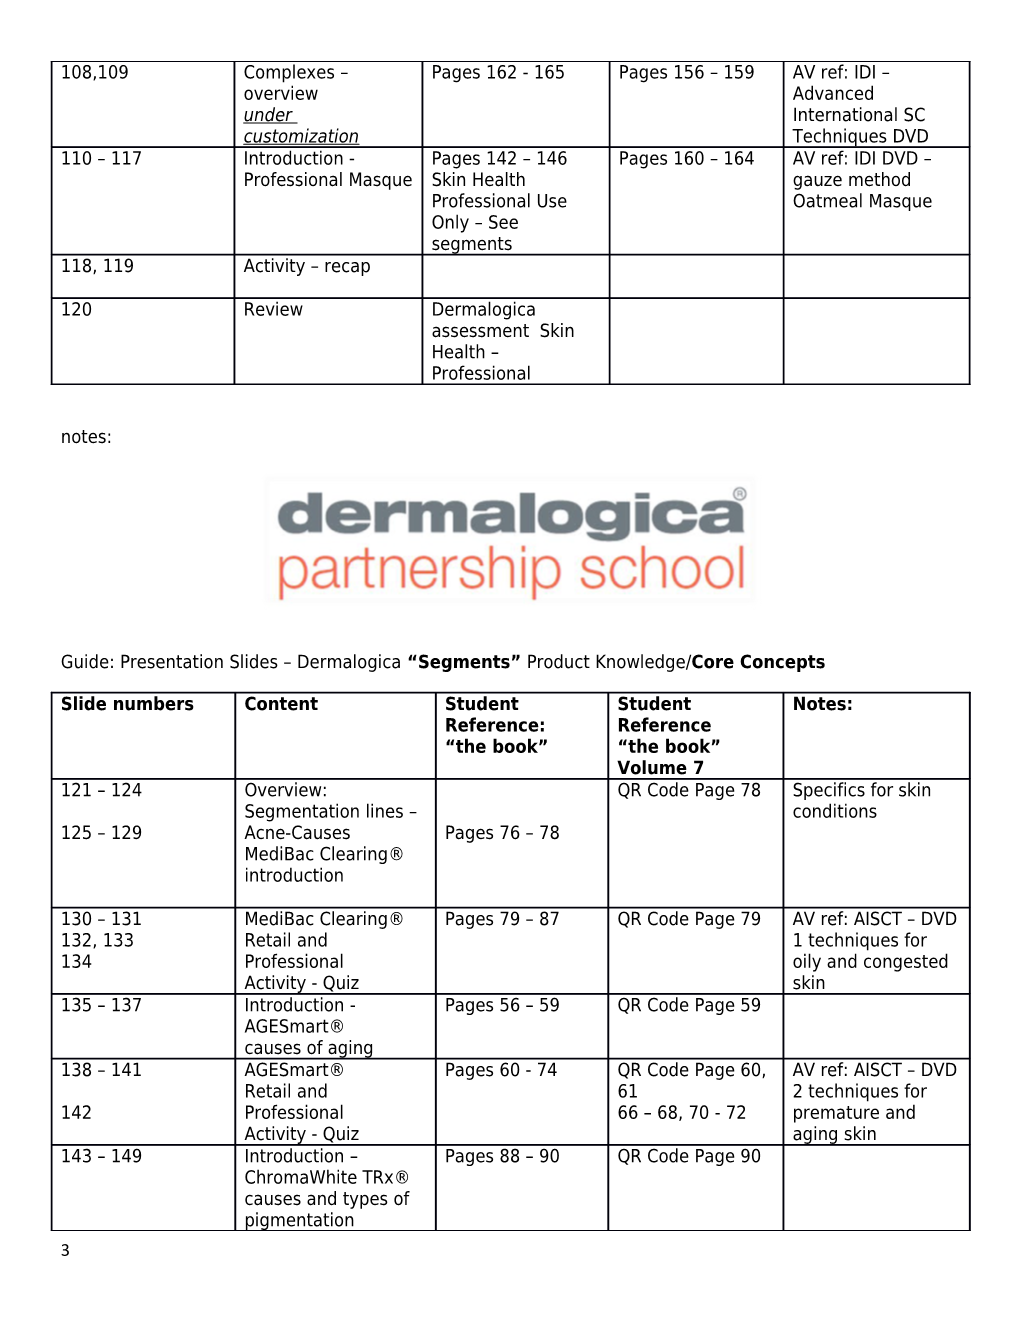 Guide: Presentation Slides Dermalogicaretailproduct Knowledge/Coreconcepts